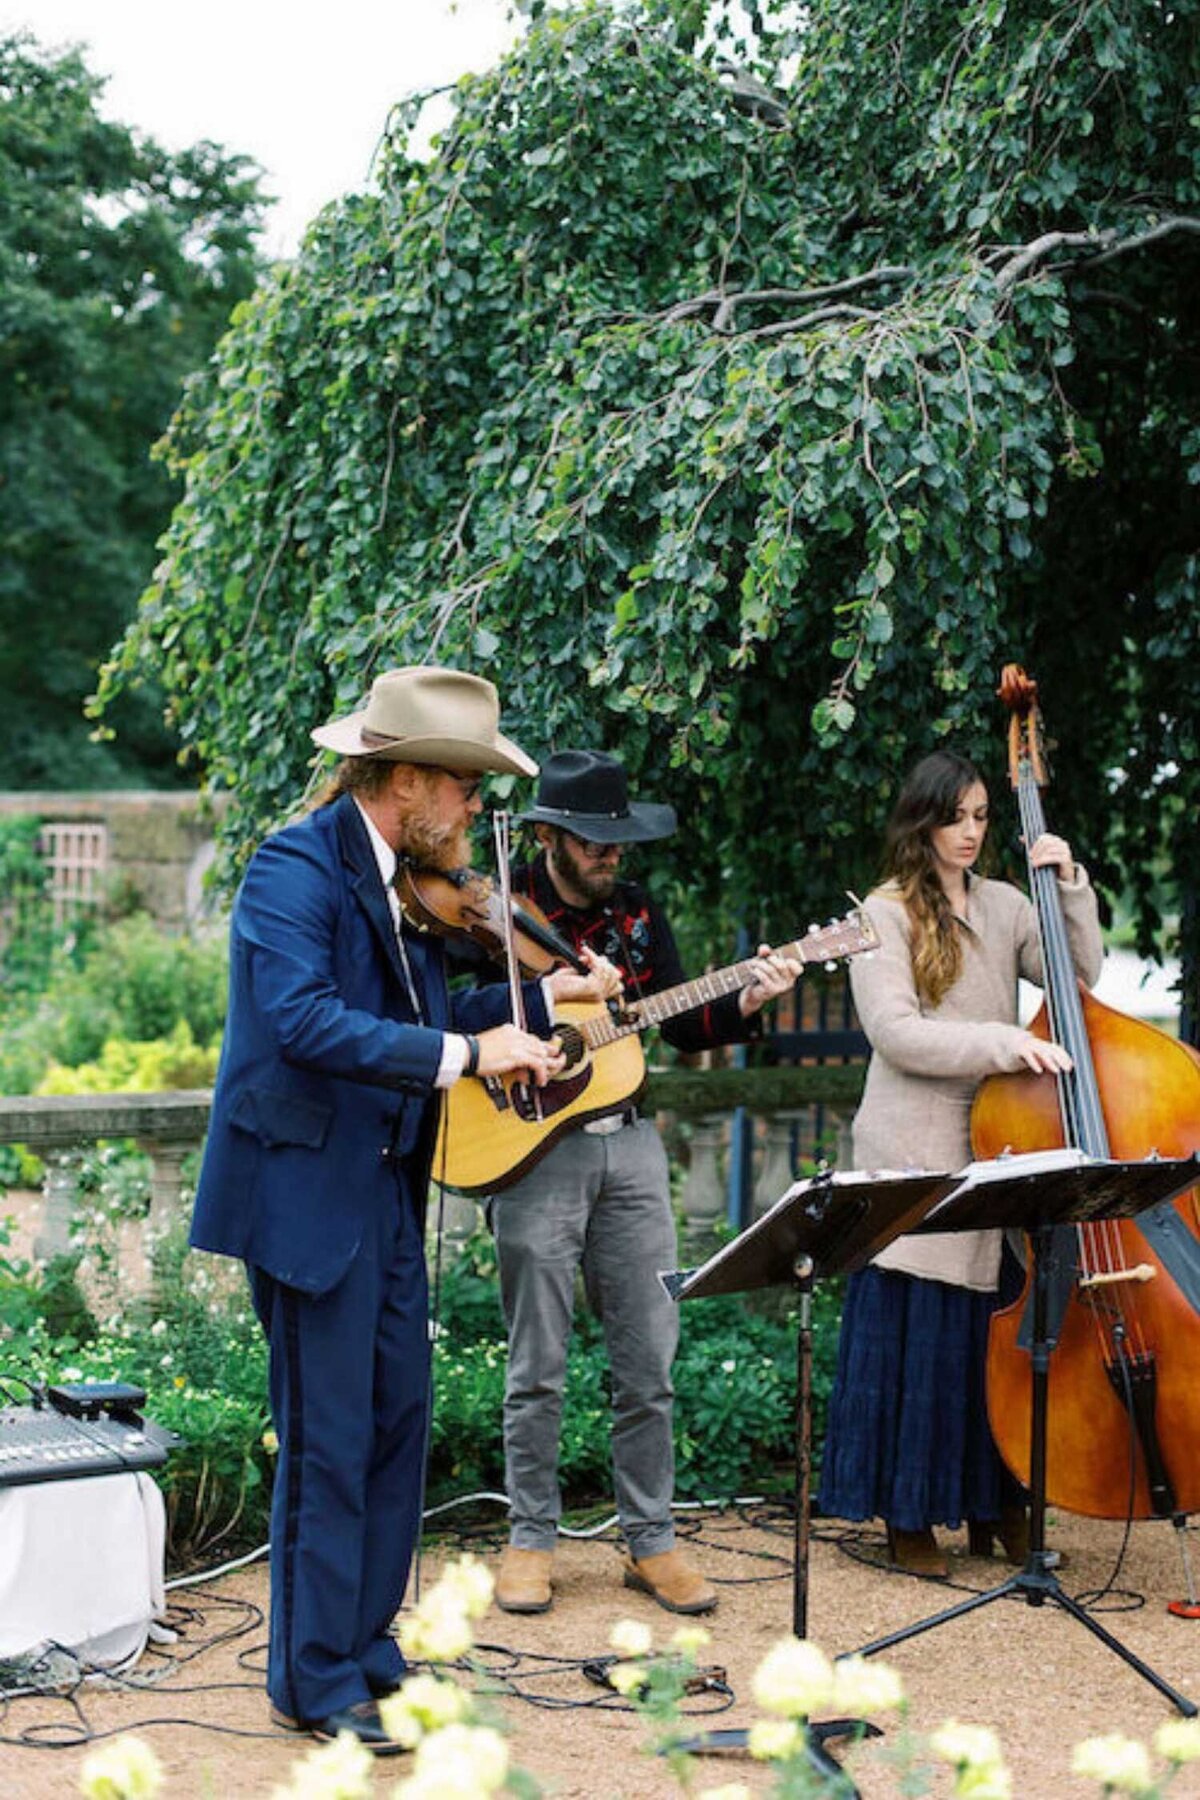 Chicago Botanic Garden Wedding | Abby McKinney Events